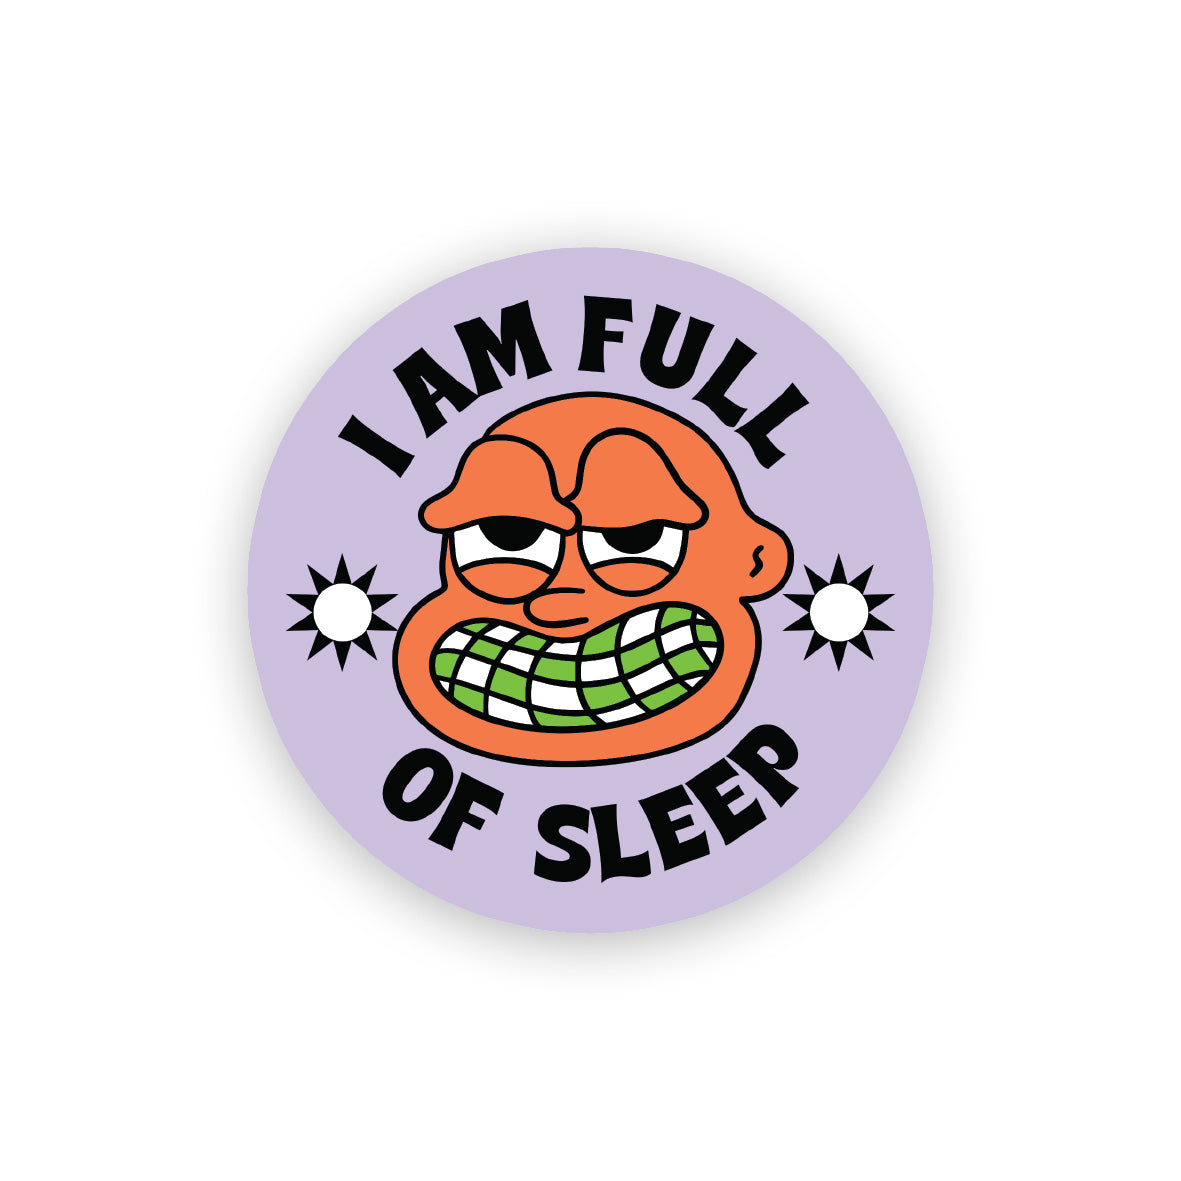 Full of sleep Sticker